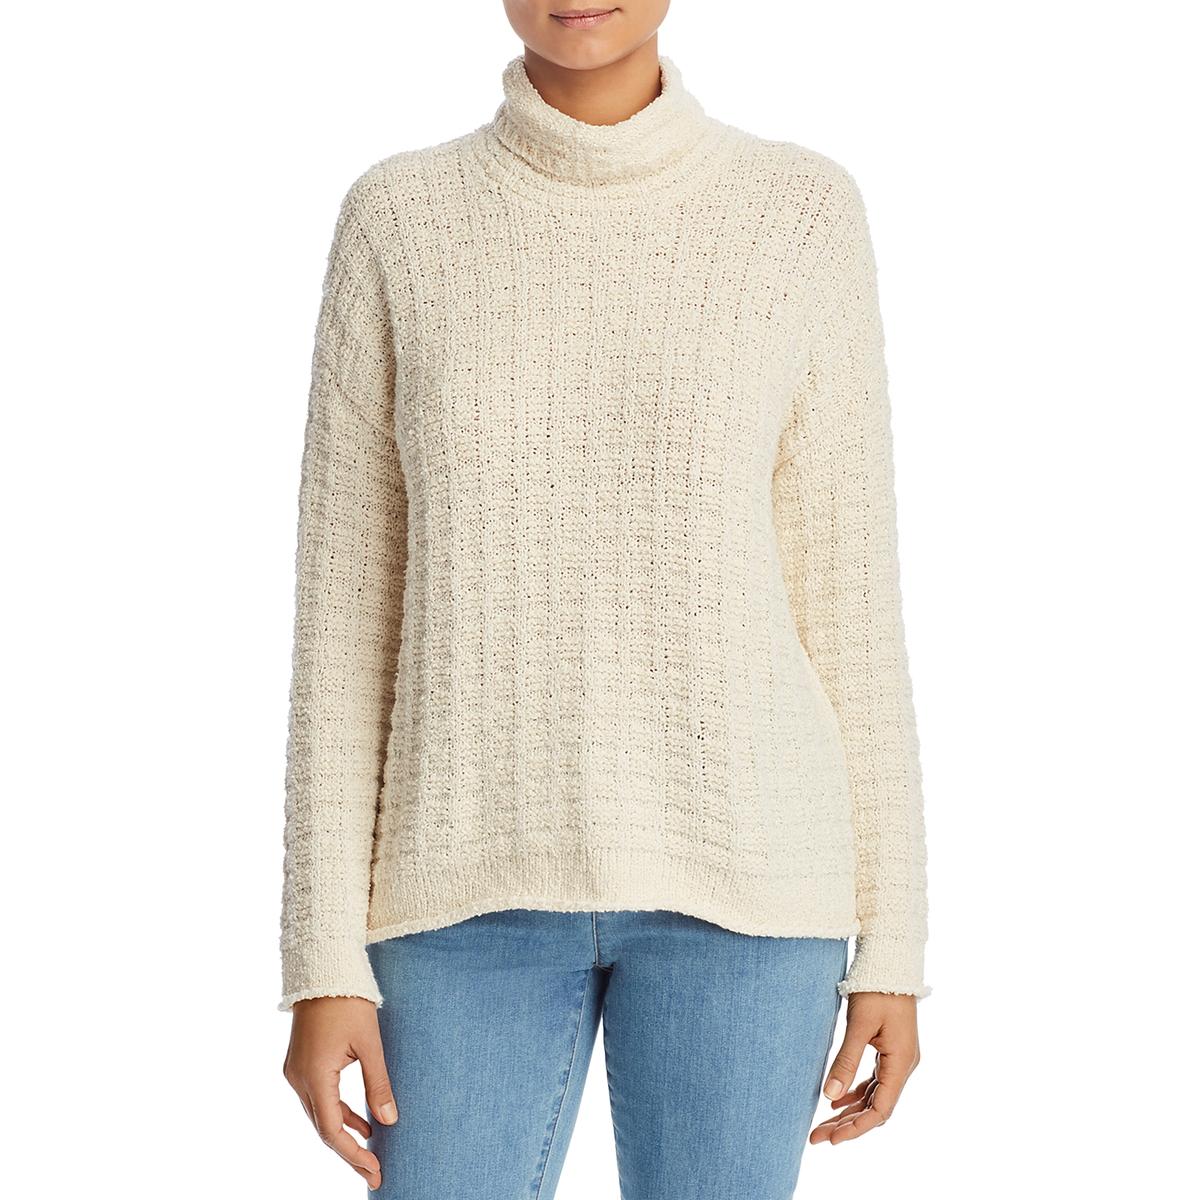 Eileen Fisher Womens Ivory Organic Cotton Turtleneck Sweater Top M BHFO ...